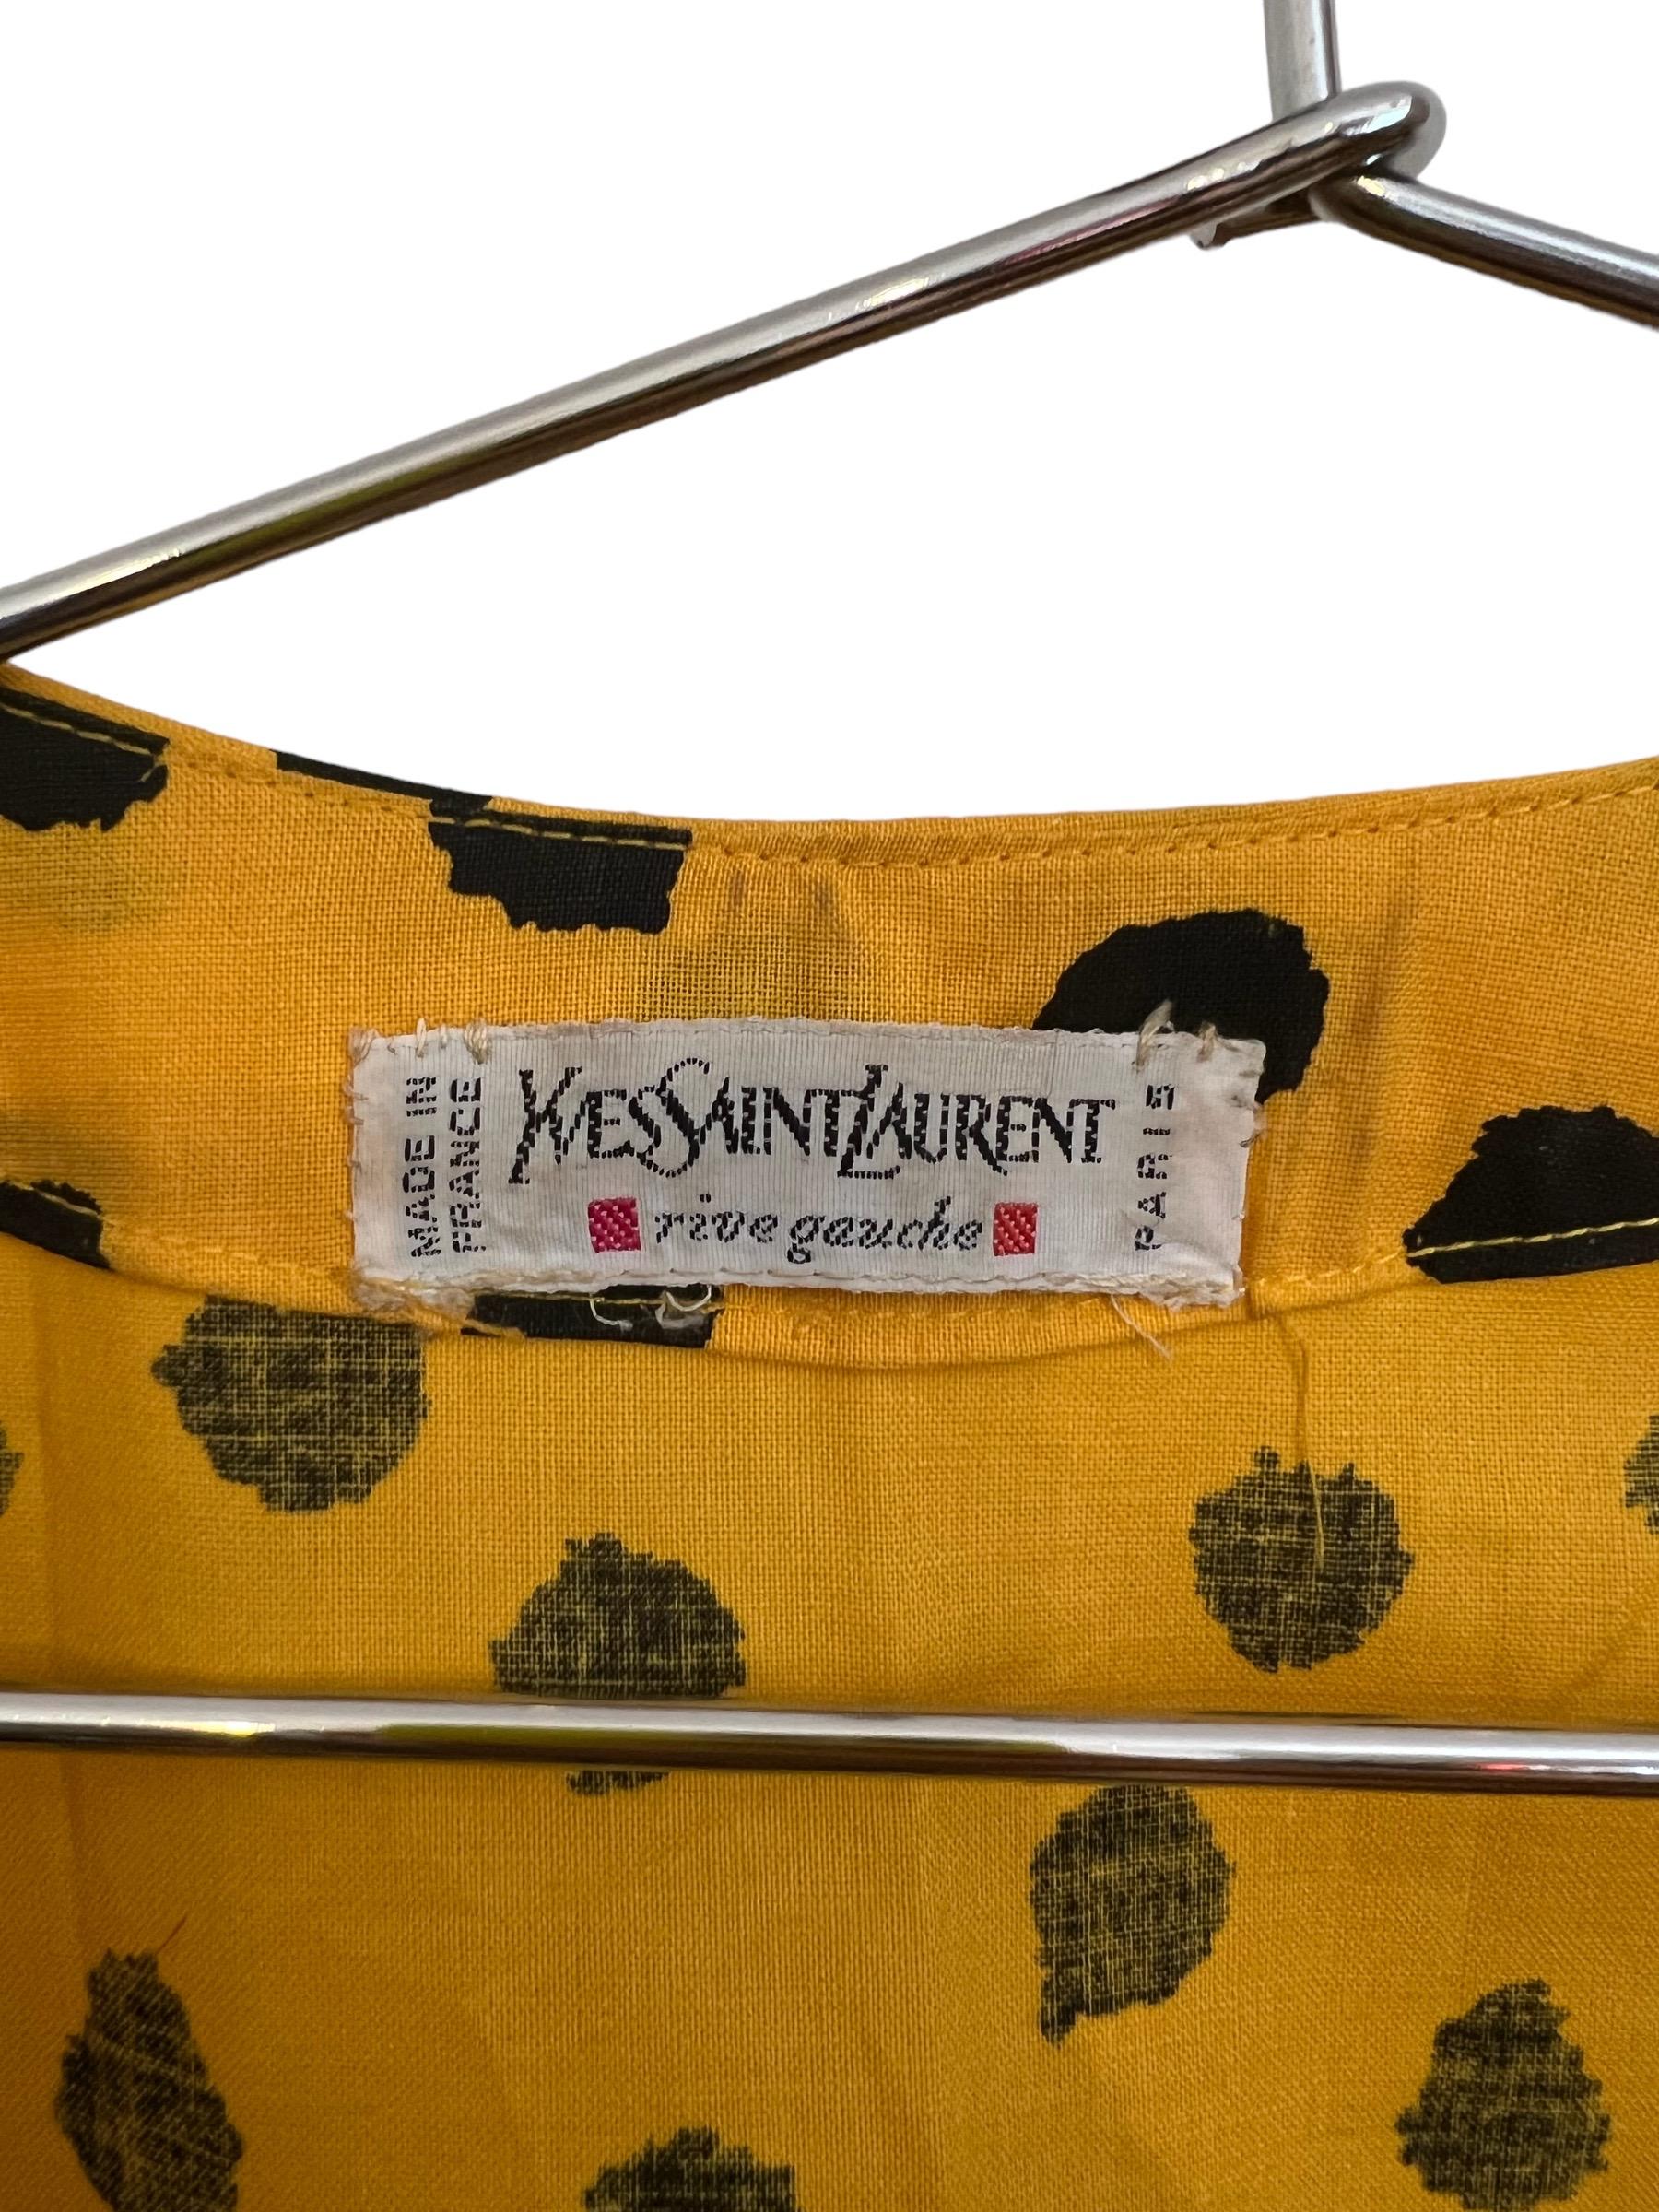 Women's Vintage Yves Saint Laurent Yellow and Black Cotton Polka Dot Dress